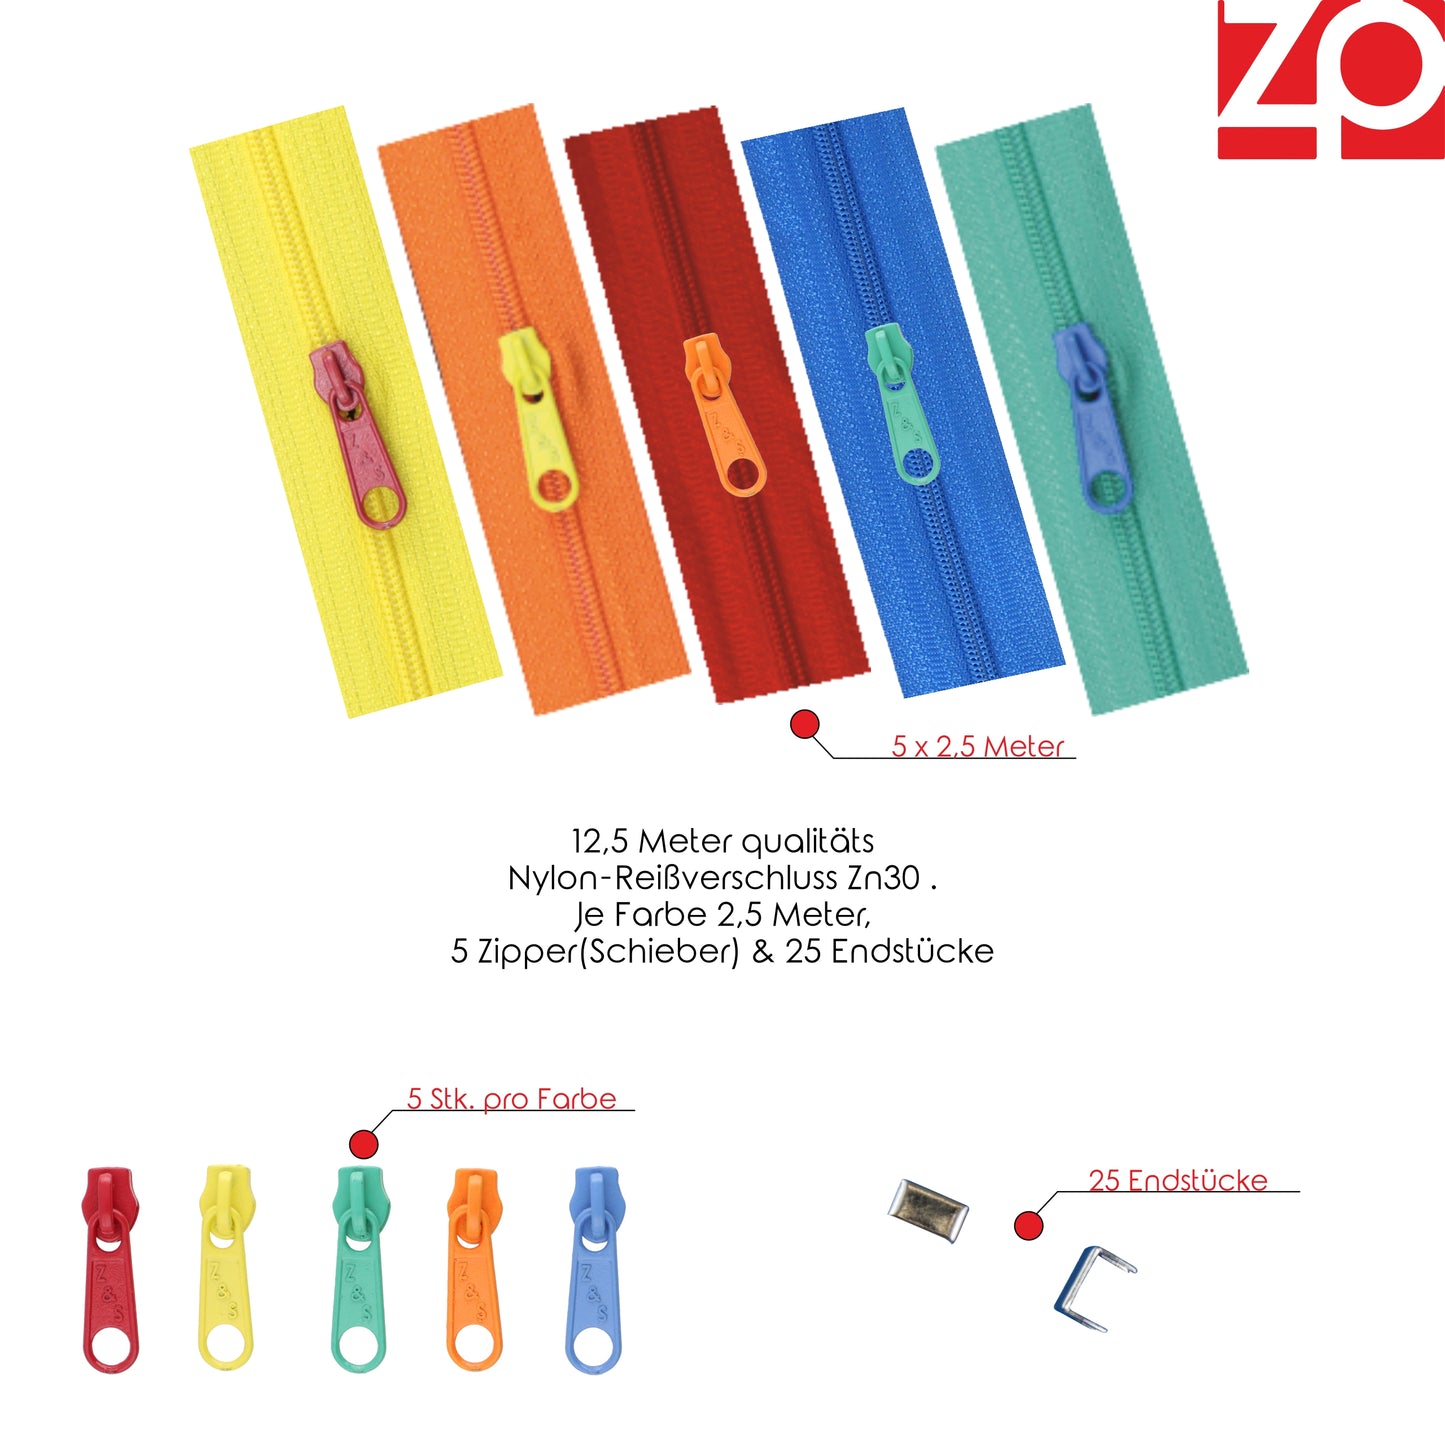 ZIPP AND SLIDE - endless zipper set with slider 3mm 12.5 meters - nickel free - color set no. 8 The original